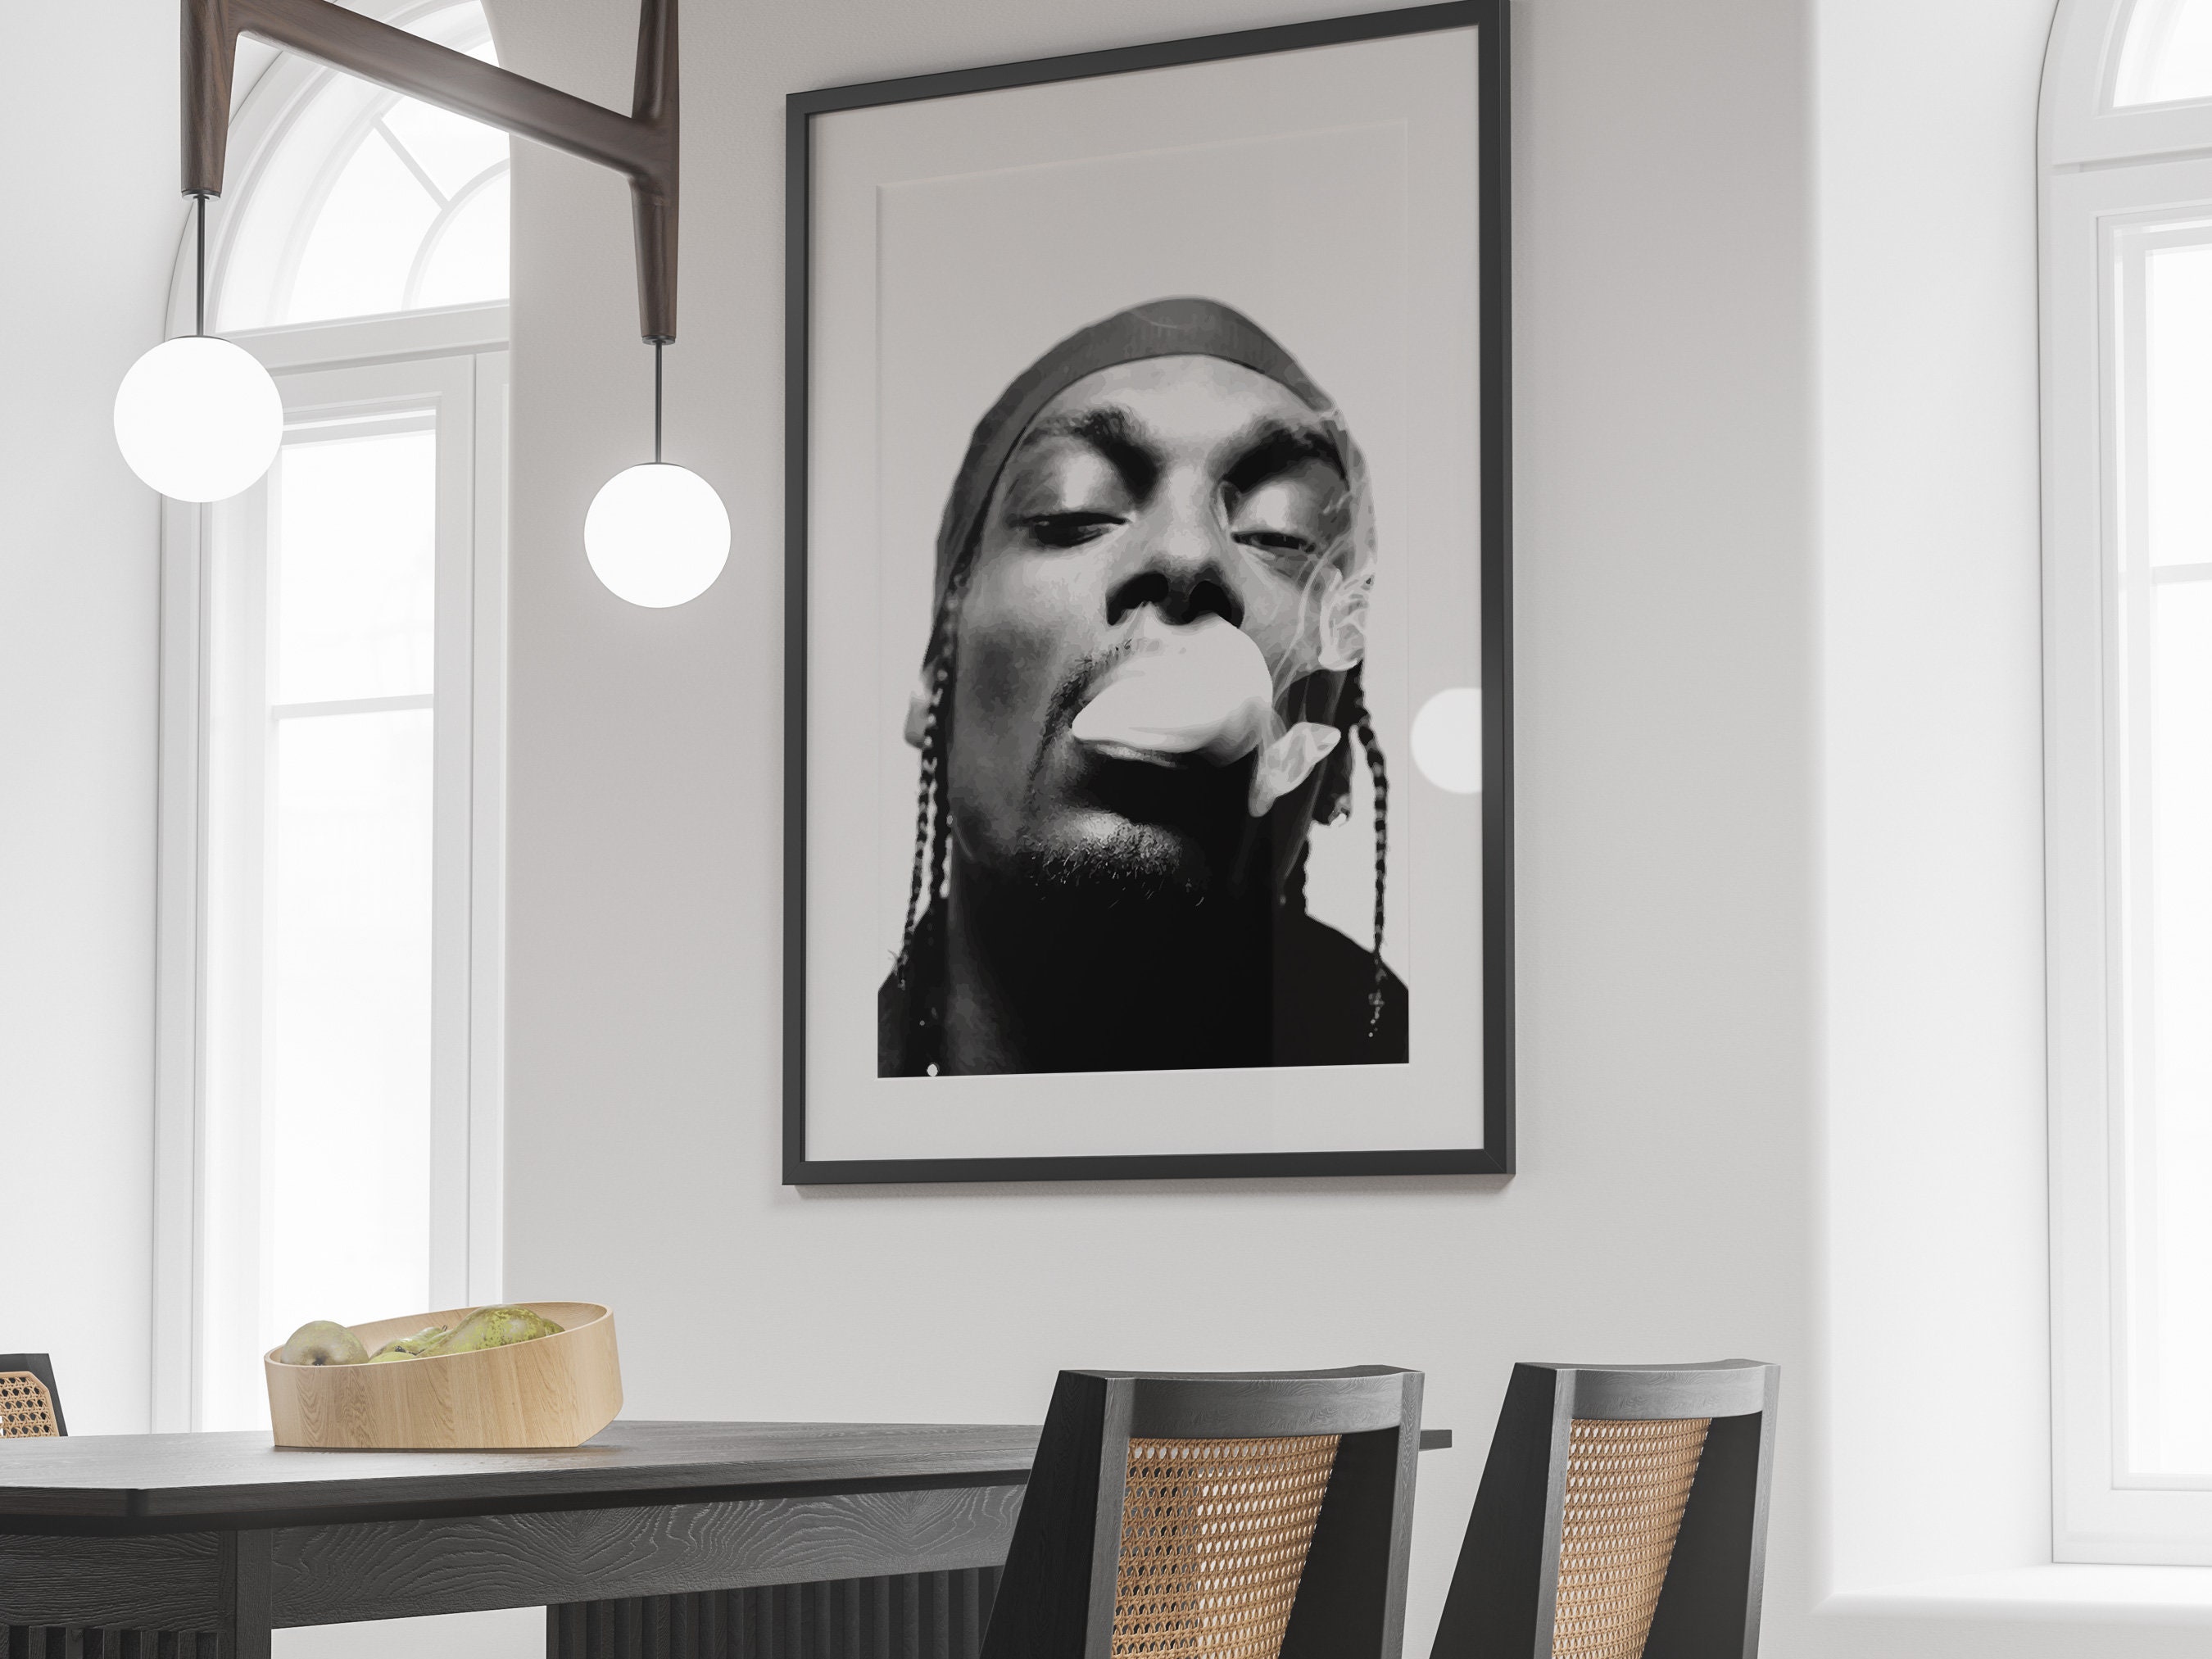 Tupac Shakur 2Pac poster wall art home decor photo print 16x24 20x30 24x36 sz